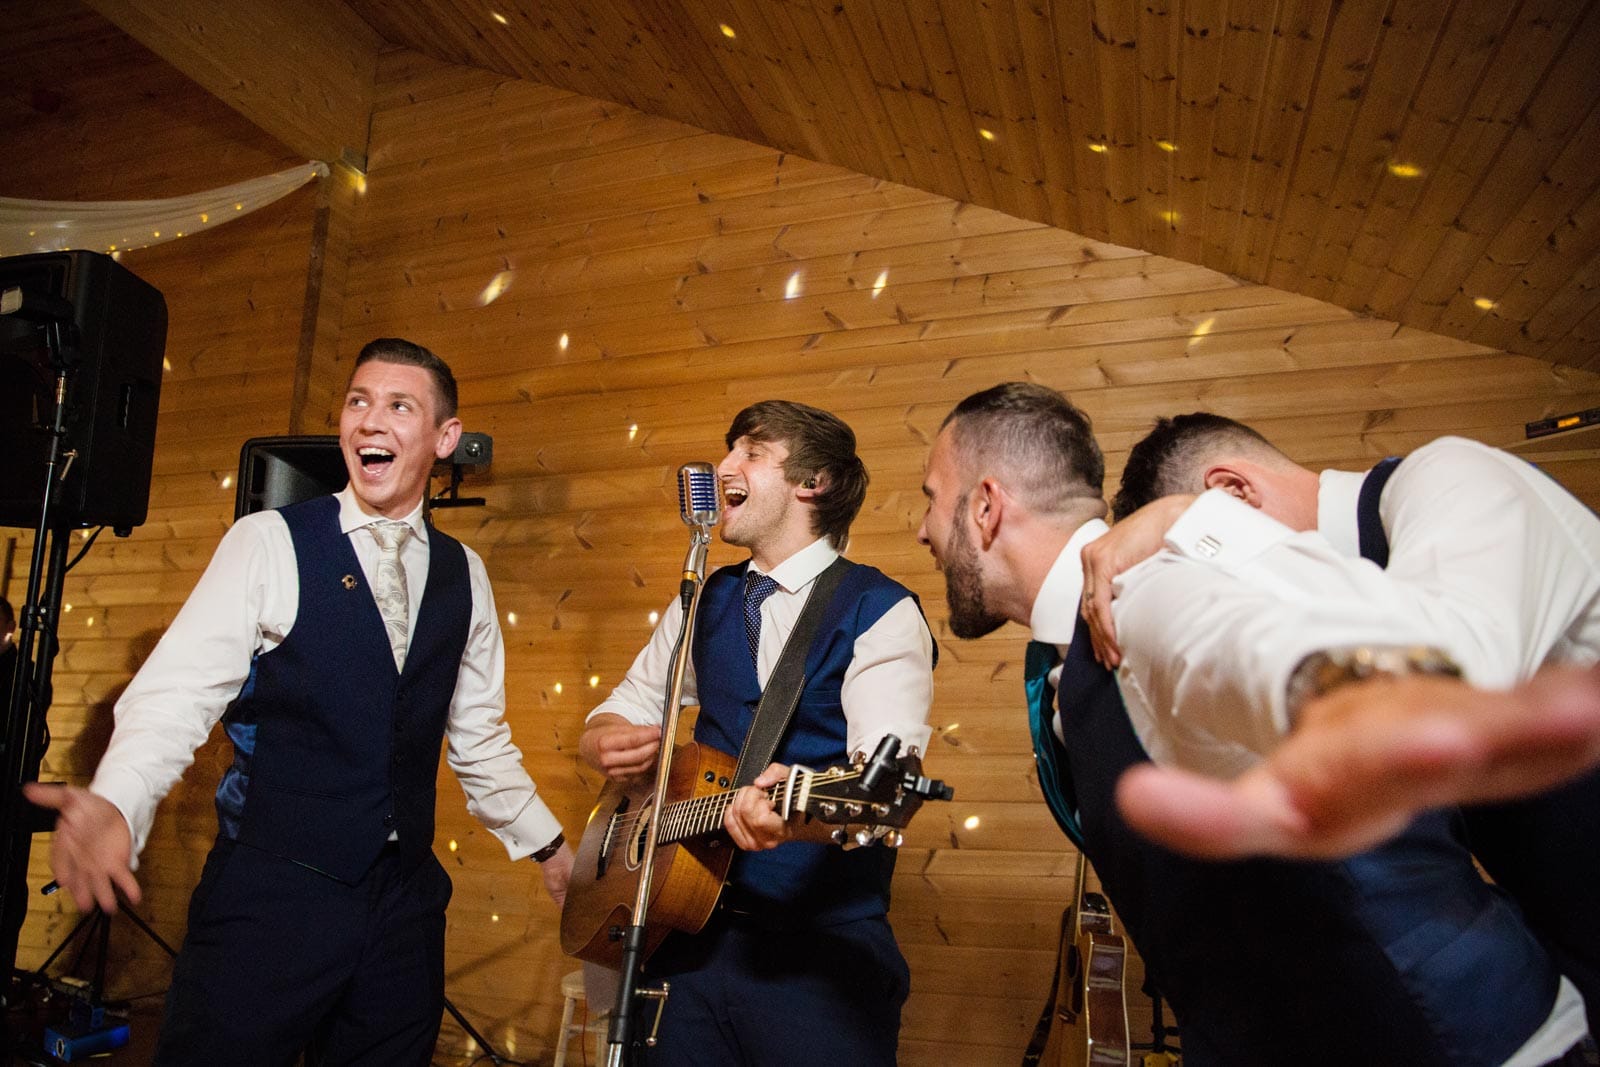 groomsmen singing during the reception at styal lodge wedding venue